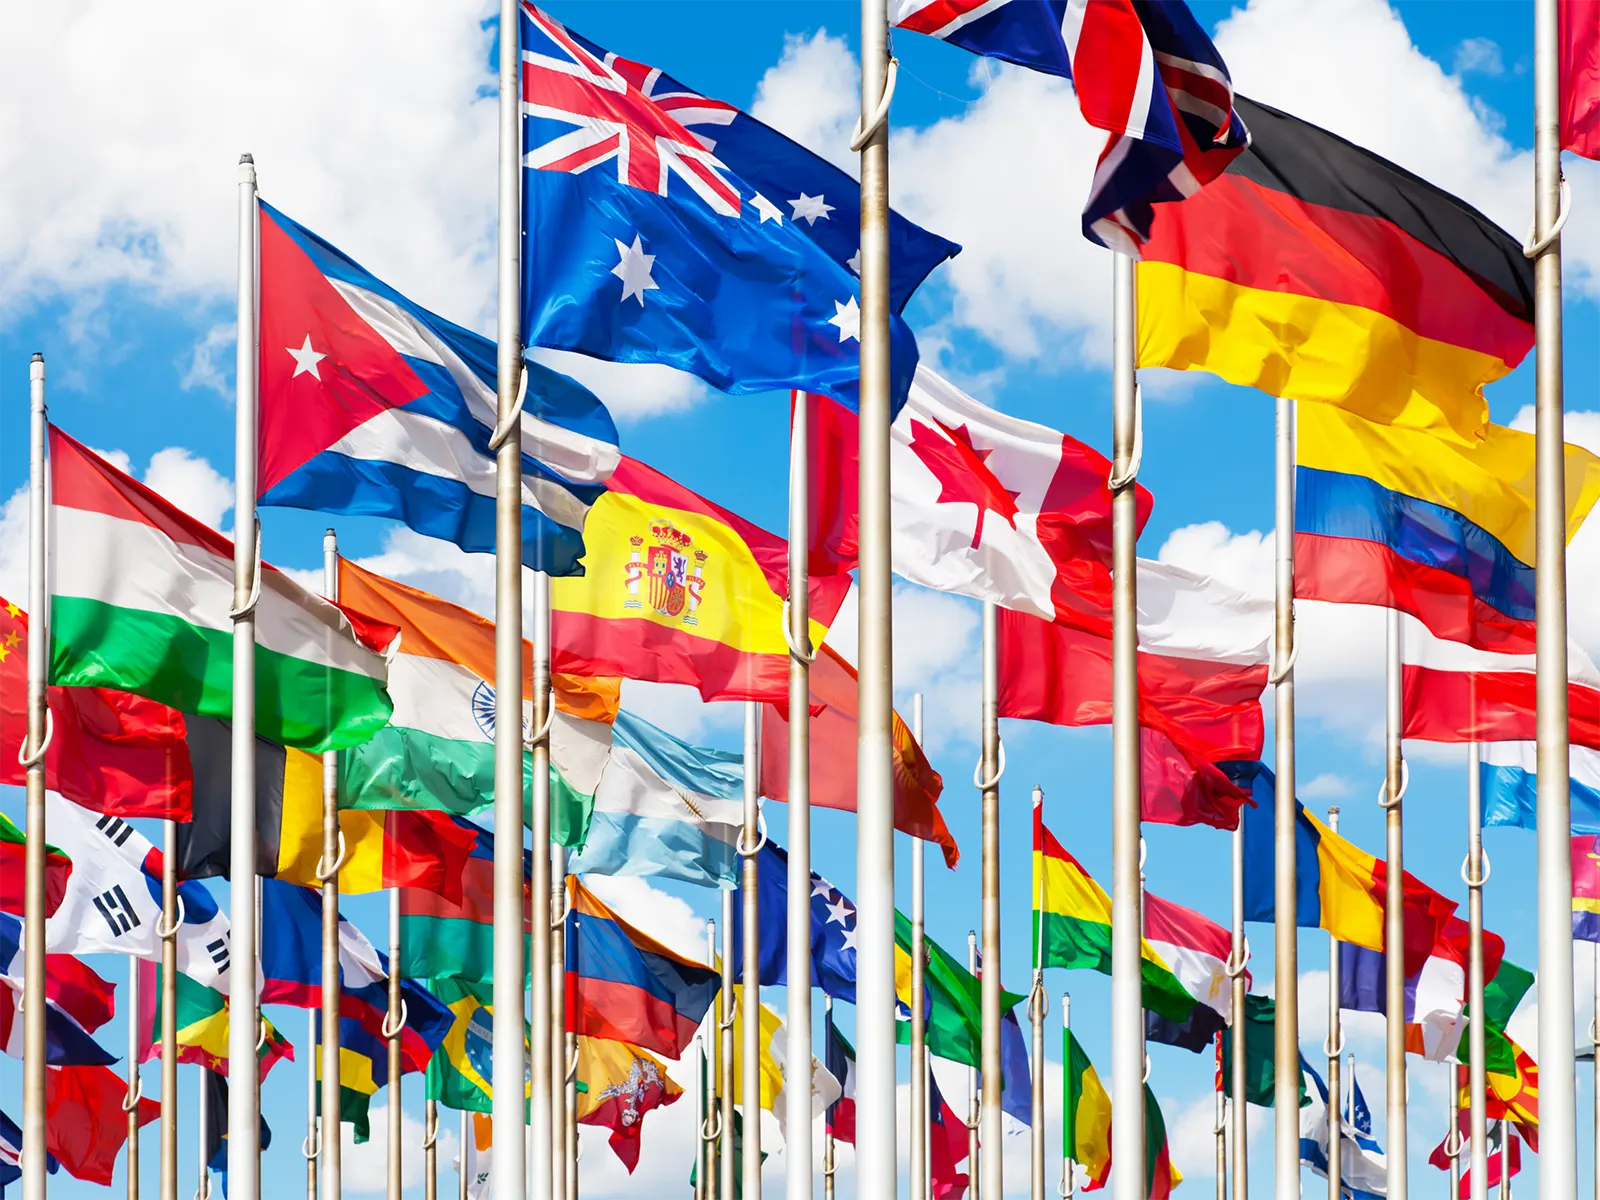 a display of multiple international flags on flagpoles